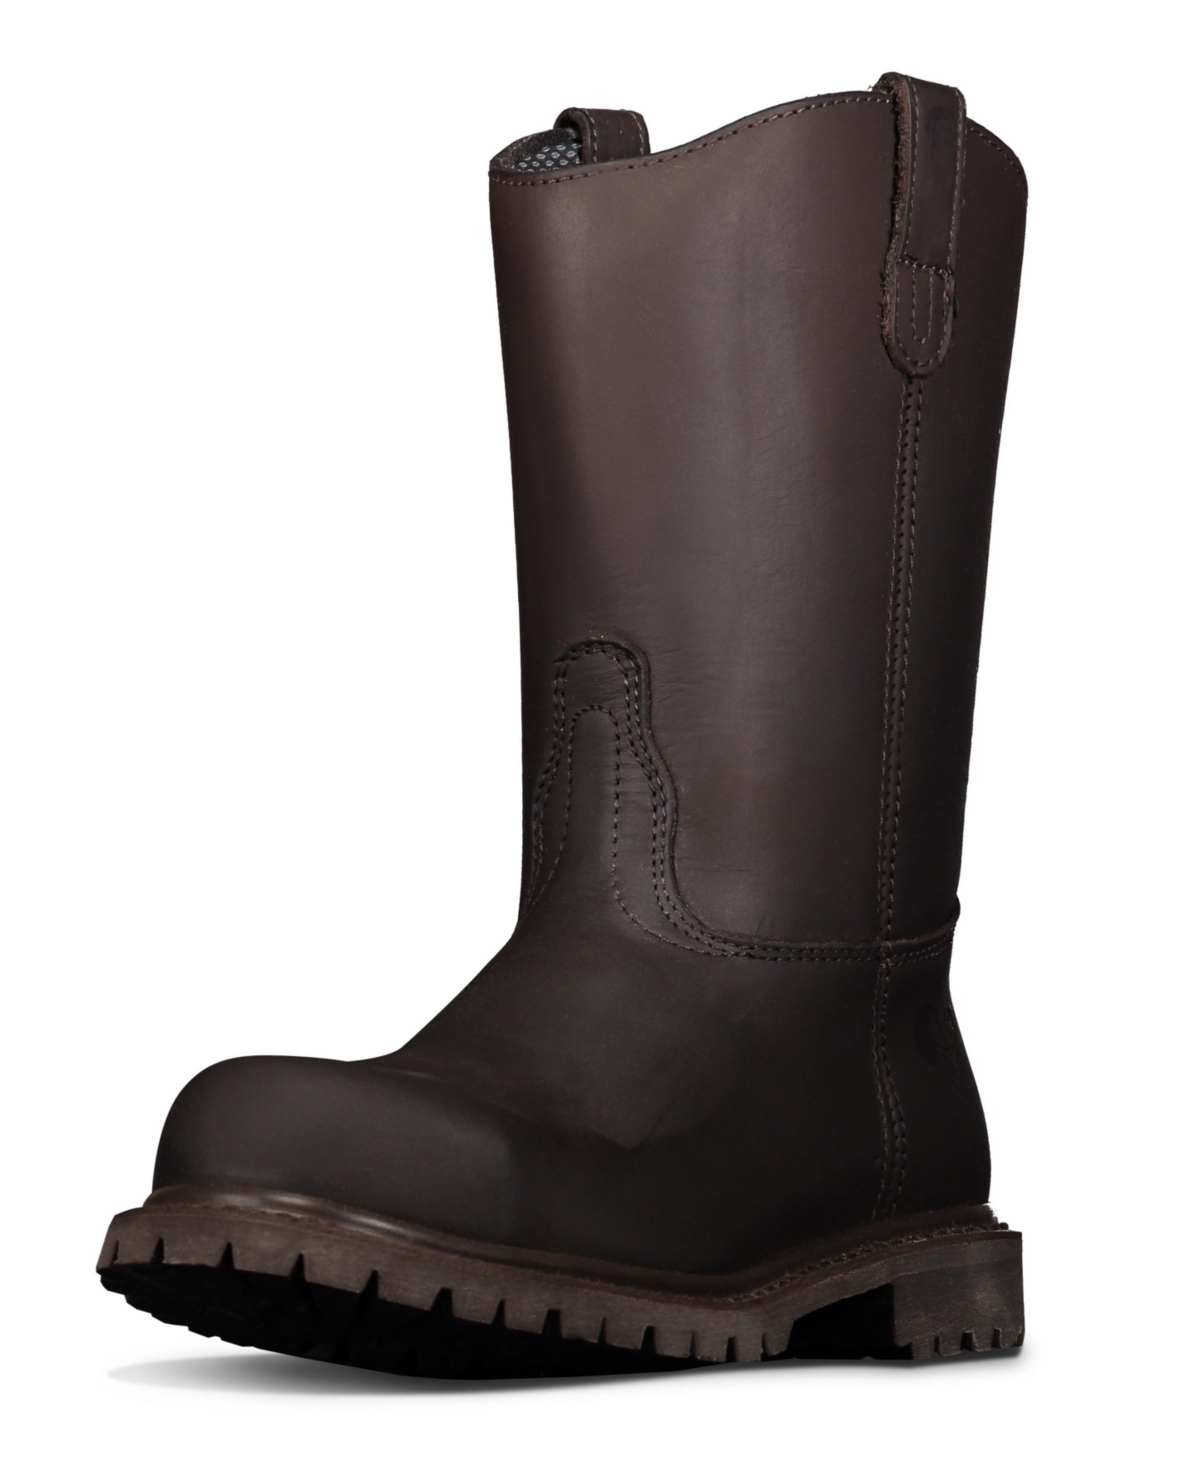 10" Wellington Steel Toe Work Boots for Men - Electrical Hazard - Oil and Slip Resistant - Brown